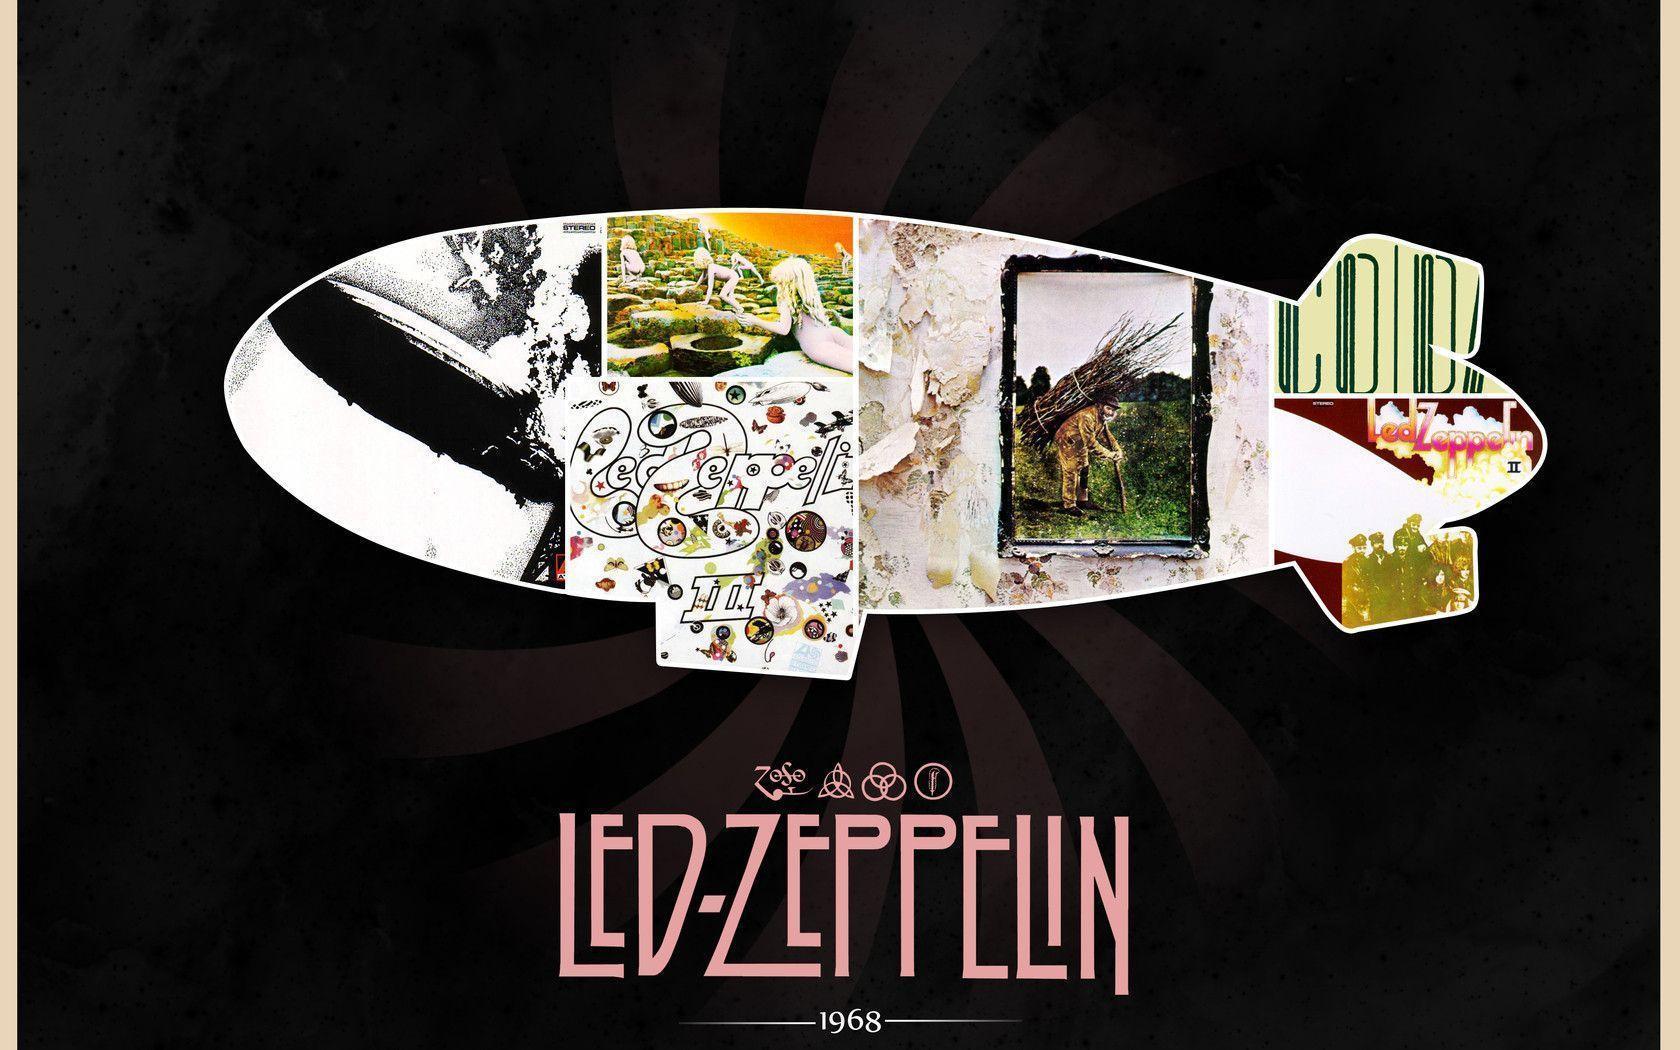 Led Zeppelin Backgrounds - Wallpaper Cave